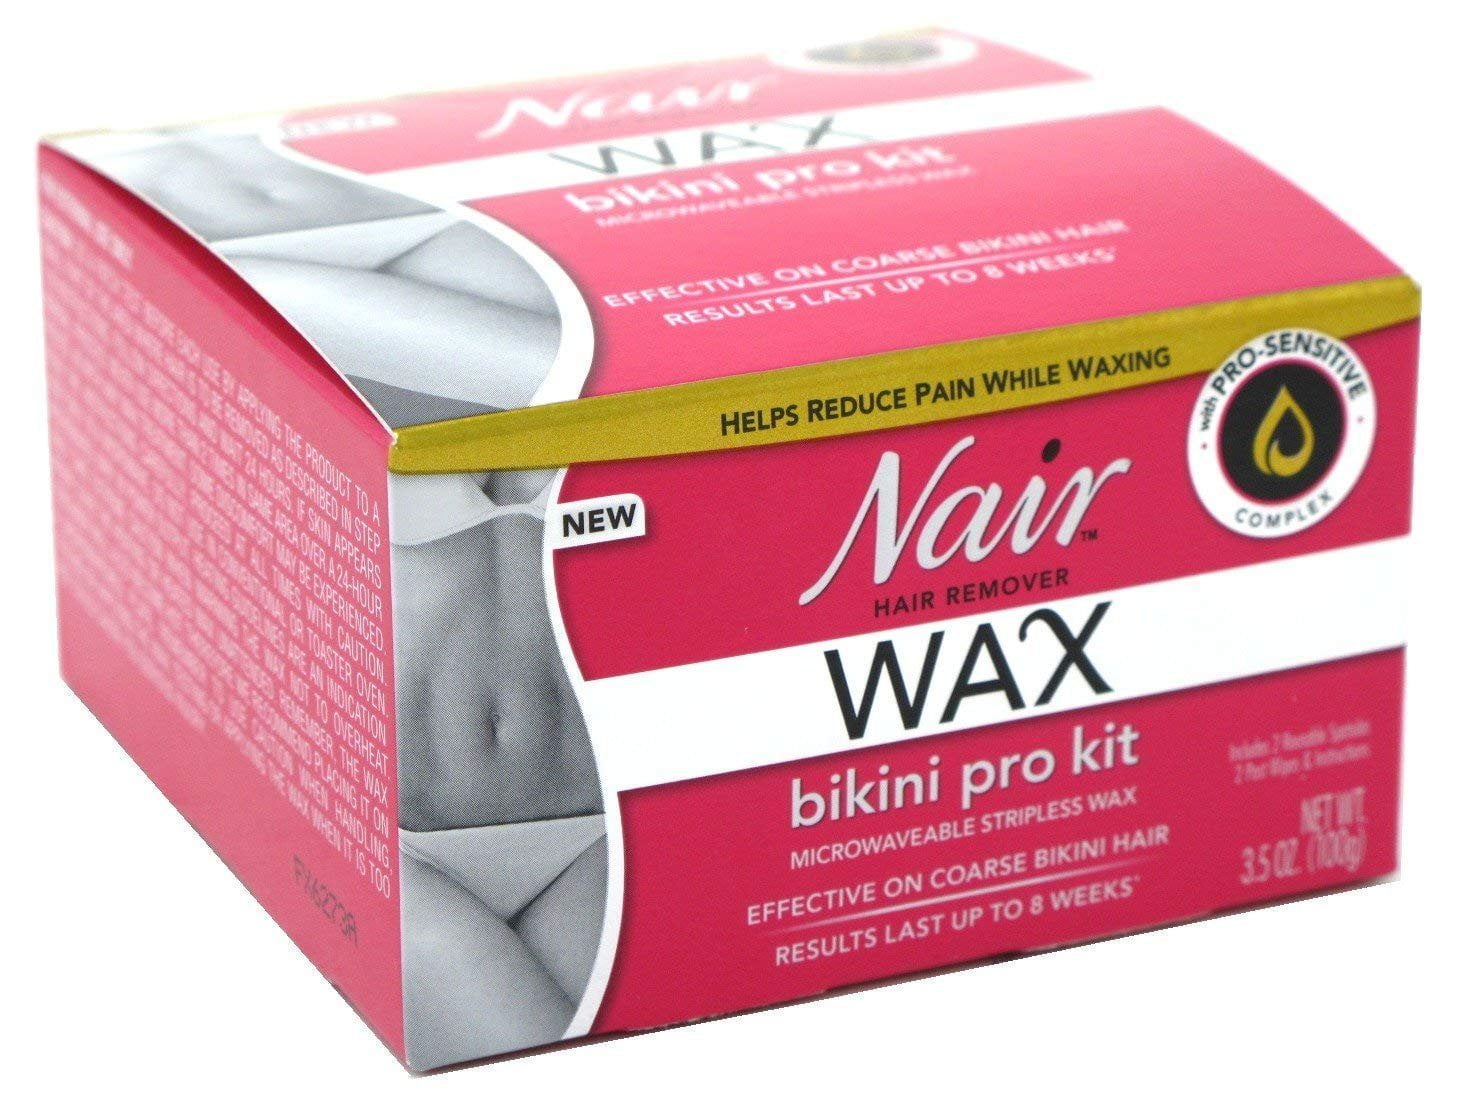 Nair Hair Remover Wax Bikini Pro Kit (6 Pack), Wal-mart, Walmart.com. 